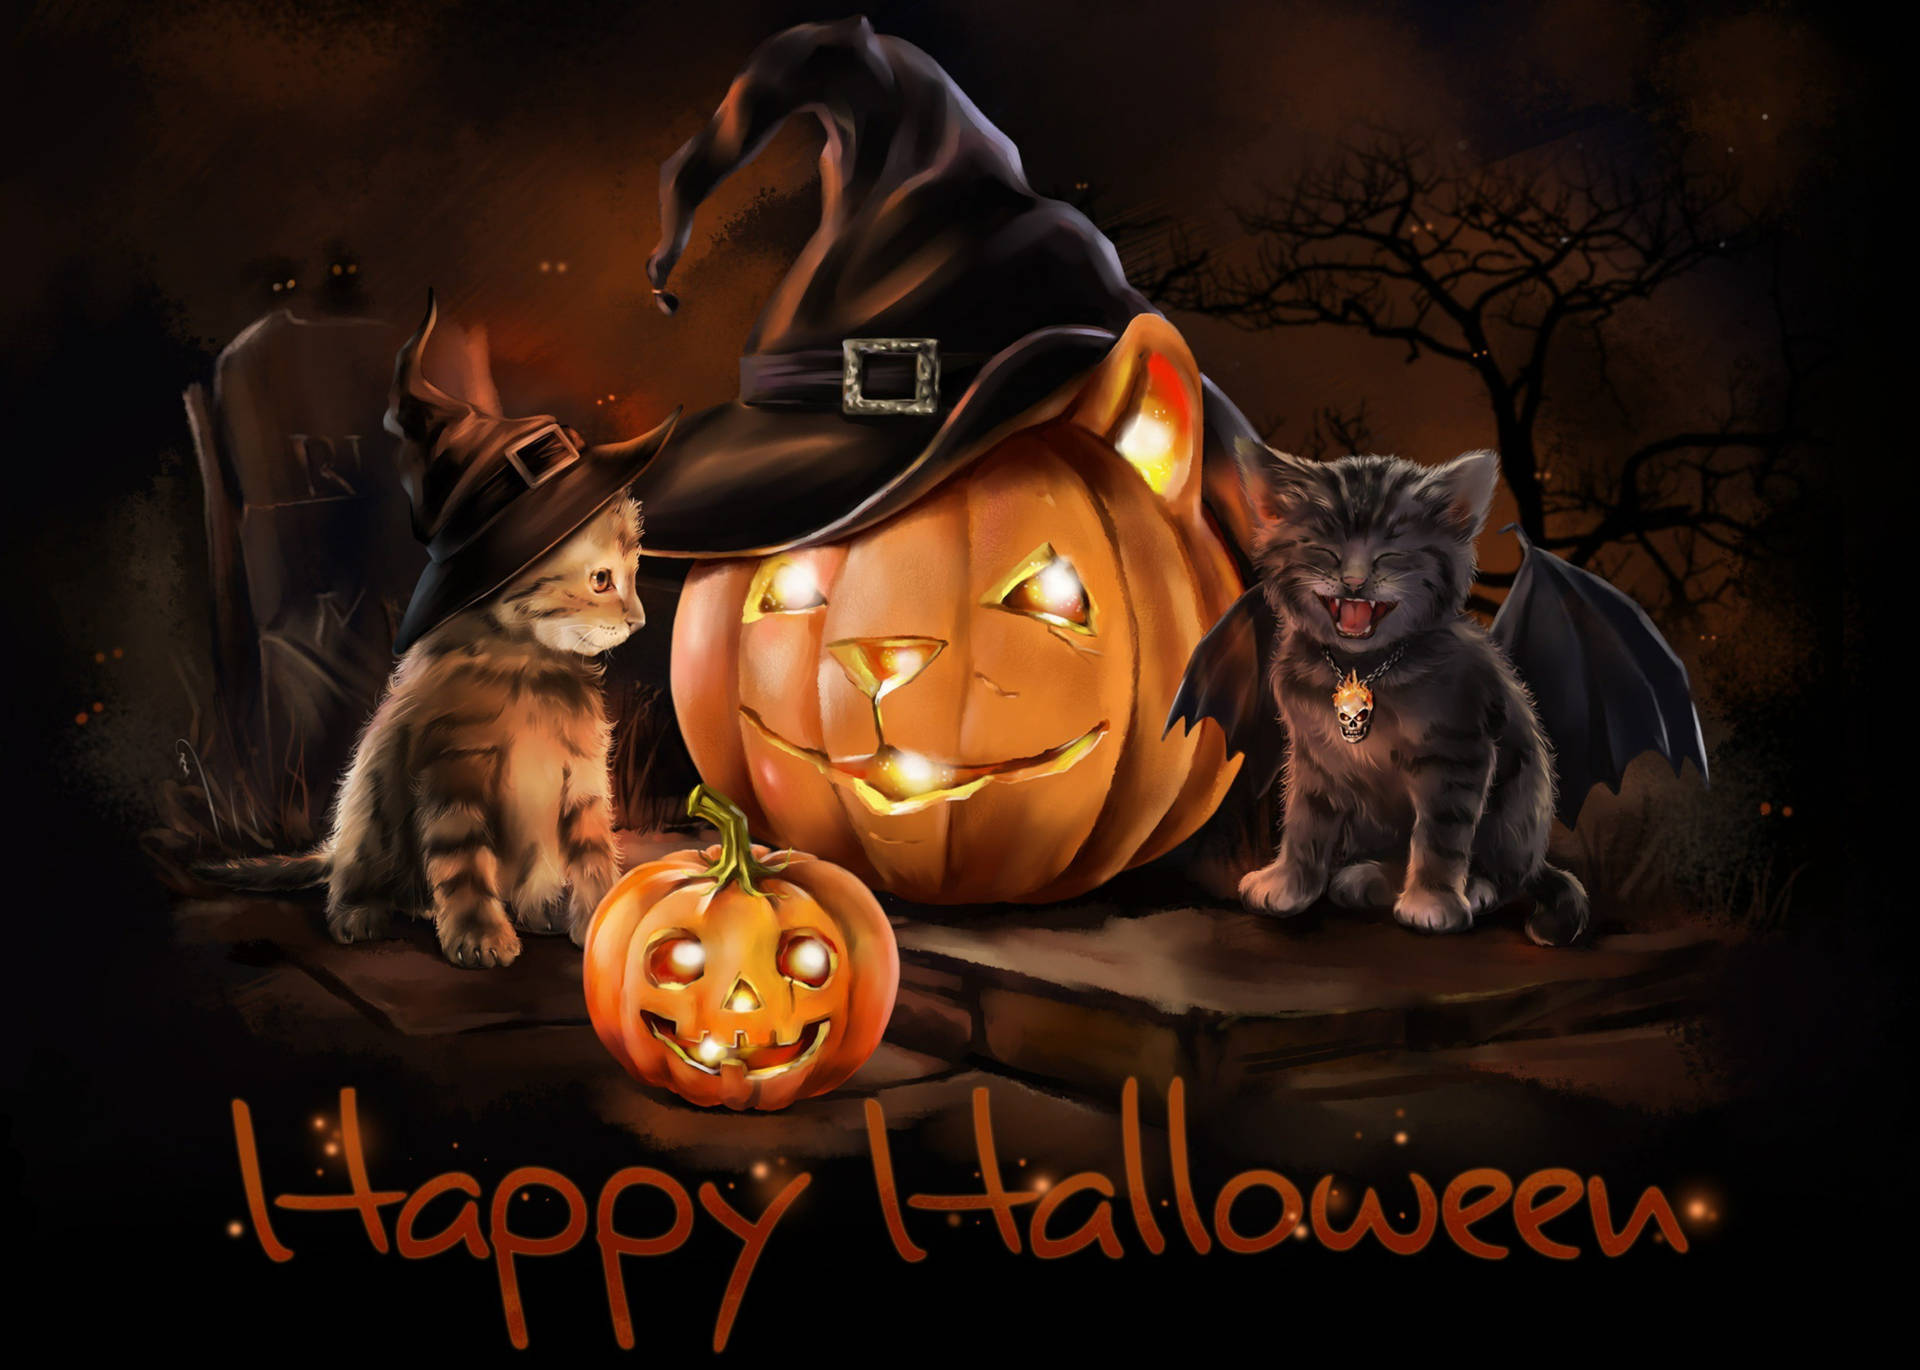 Cute Halloween Kittens Jack O' Lanterns